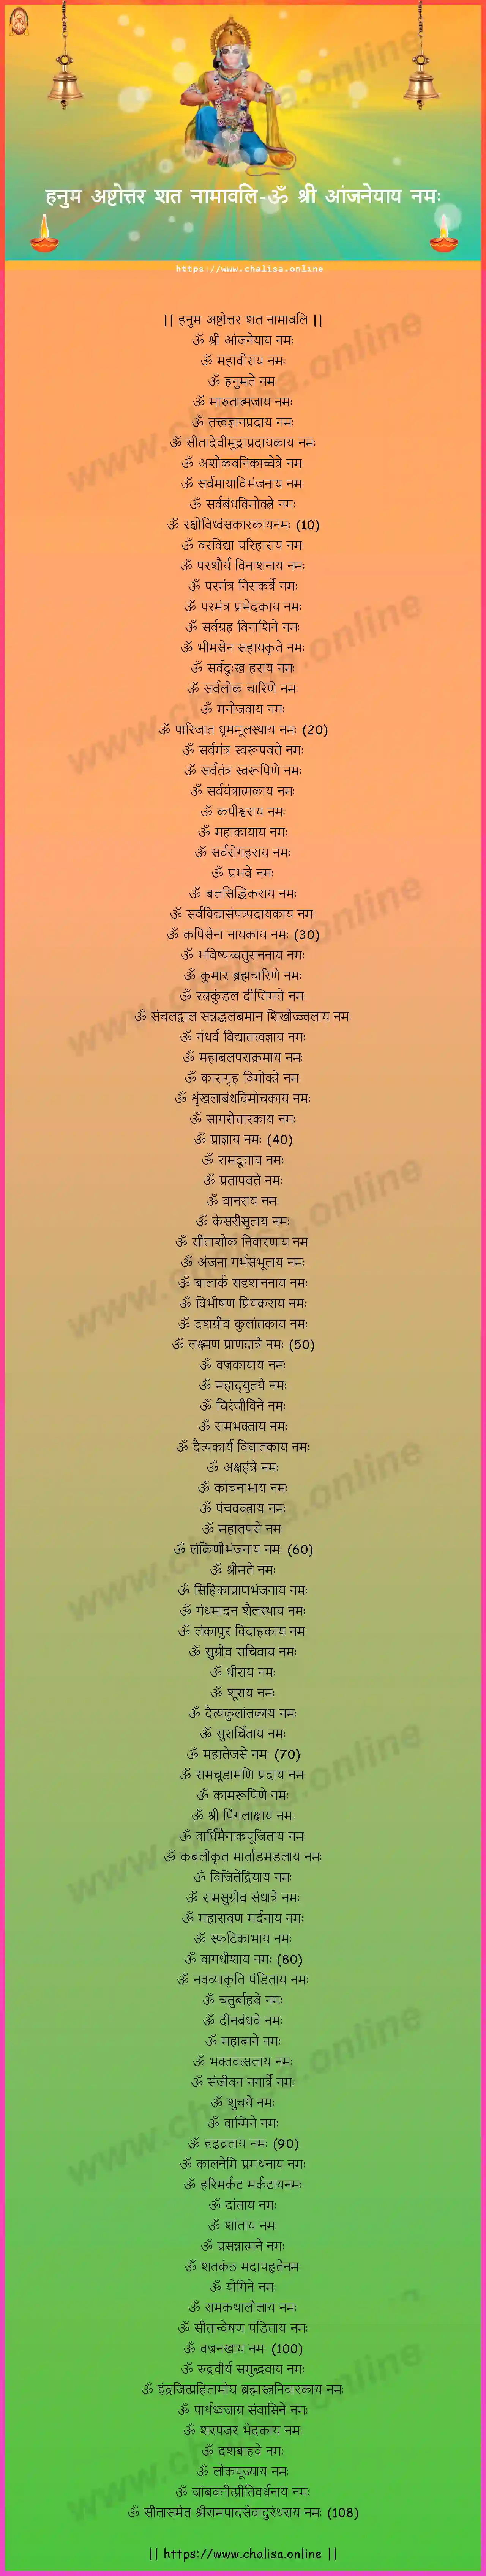 om-sri-anjaneyaya-hanuman-ashtottara-sata-namavali-nepali-nepali-lyrics-download